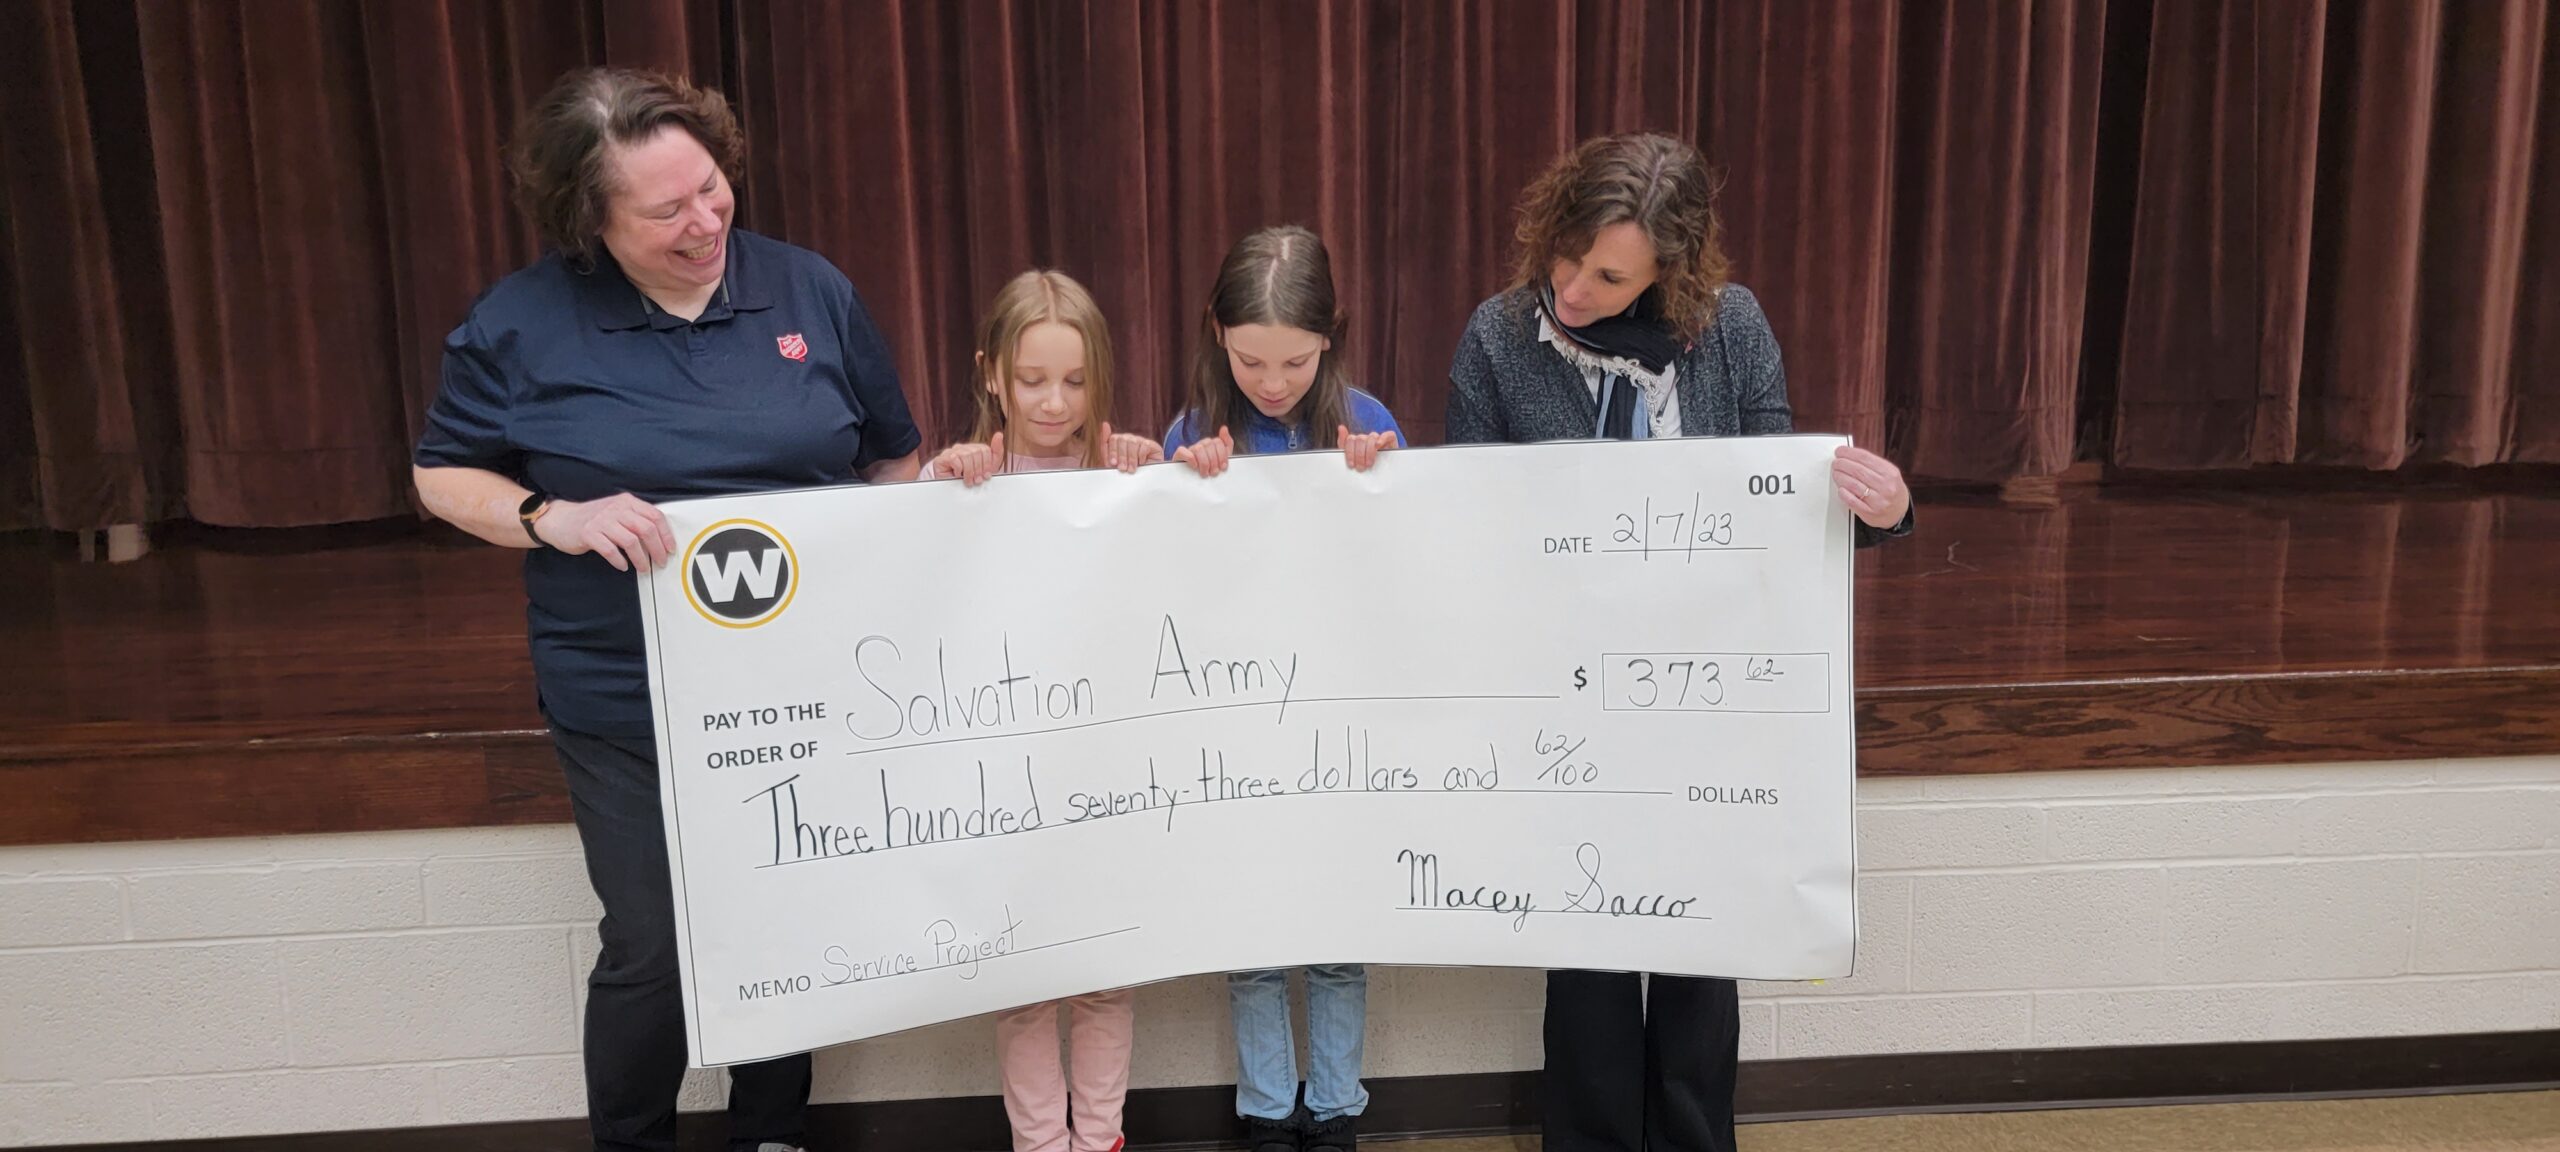 Jefferson student raises $373 for Salvation Army